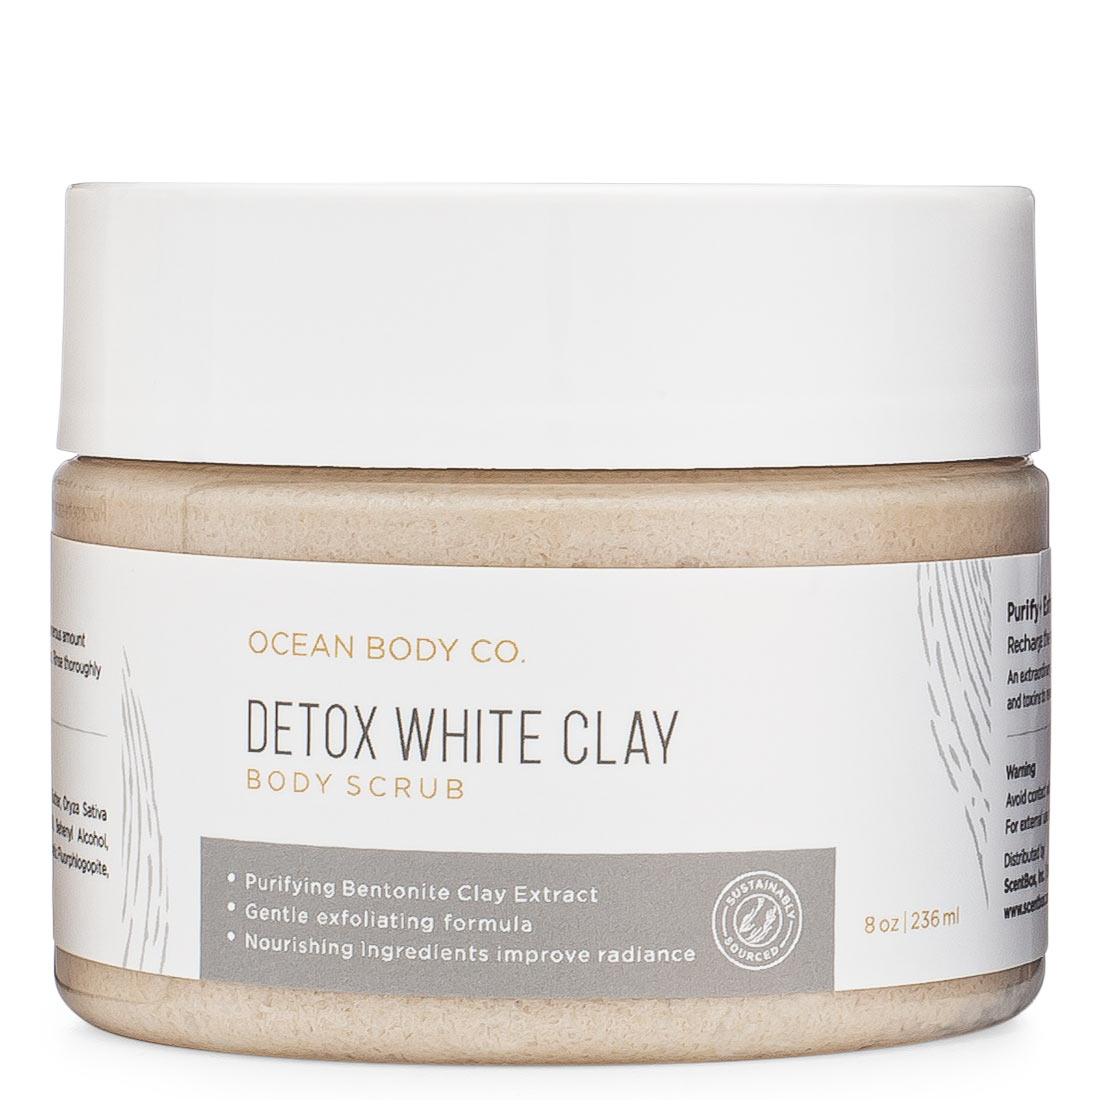 Detox-White-Clay-Body-Scrub-Ocean-Body-Co.